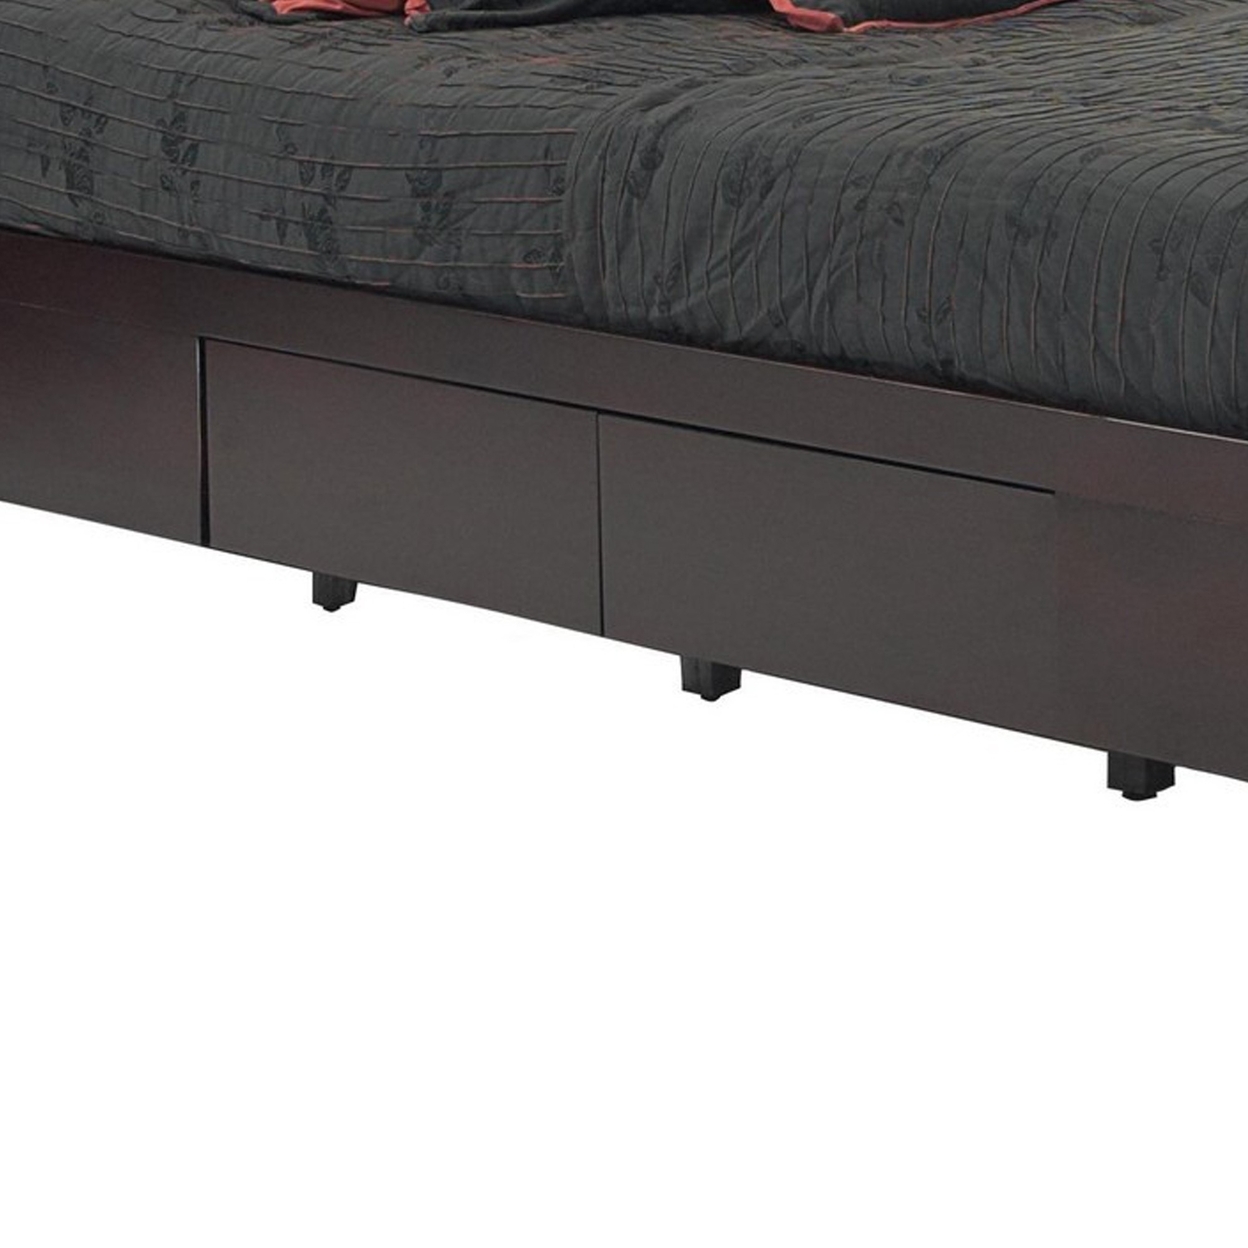 Klio Full Size Bed, 4 Storage Drawers, Low Profile, Dark Brown Mahogany- Saltoro Sherpi